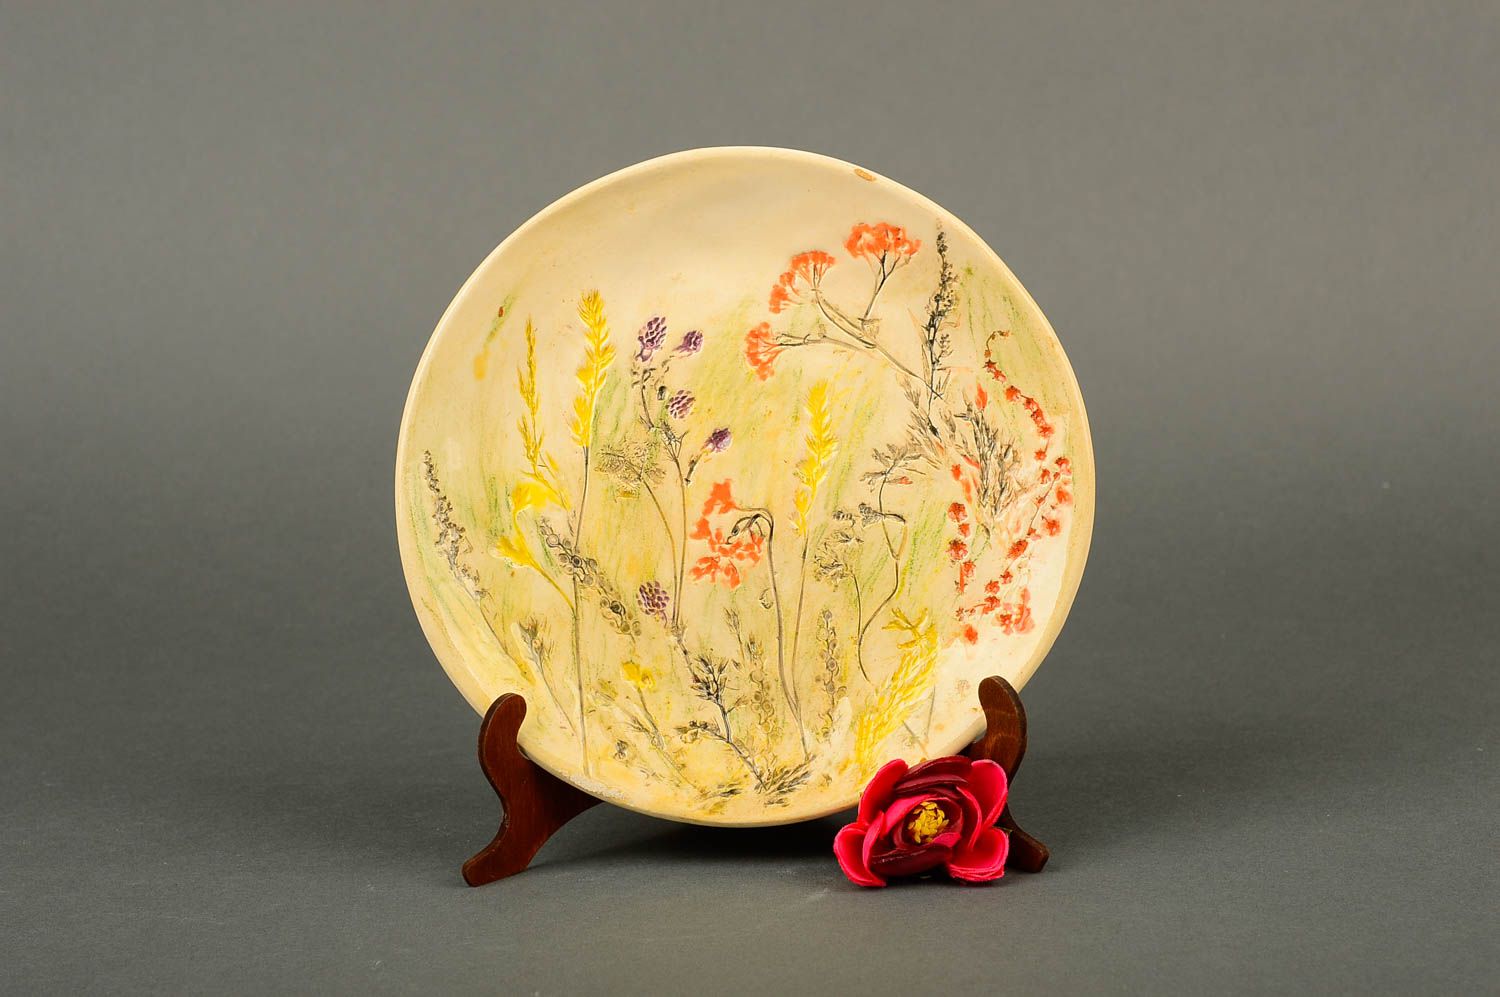 Beautiful handmade ceramic plate kitchen supplies unusual tableware ideas photo 1